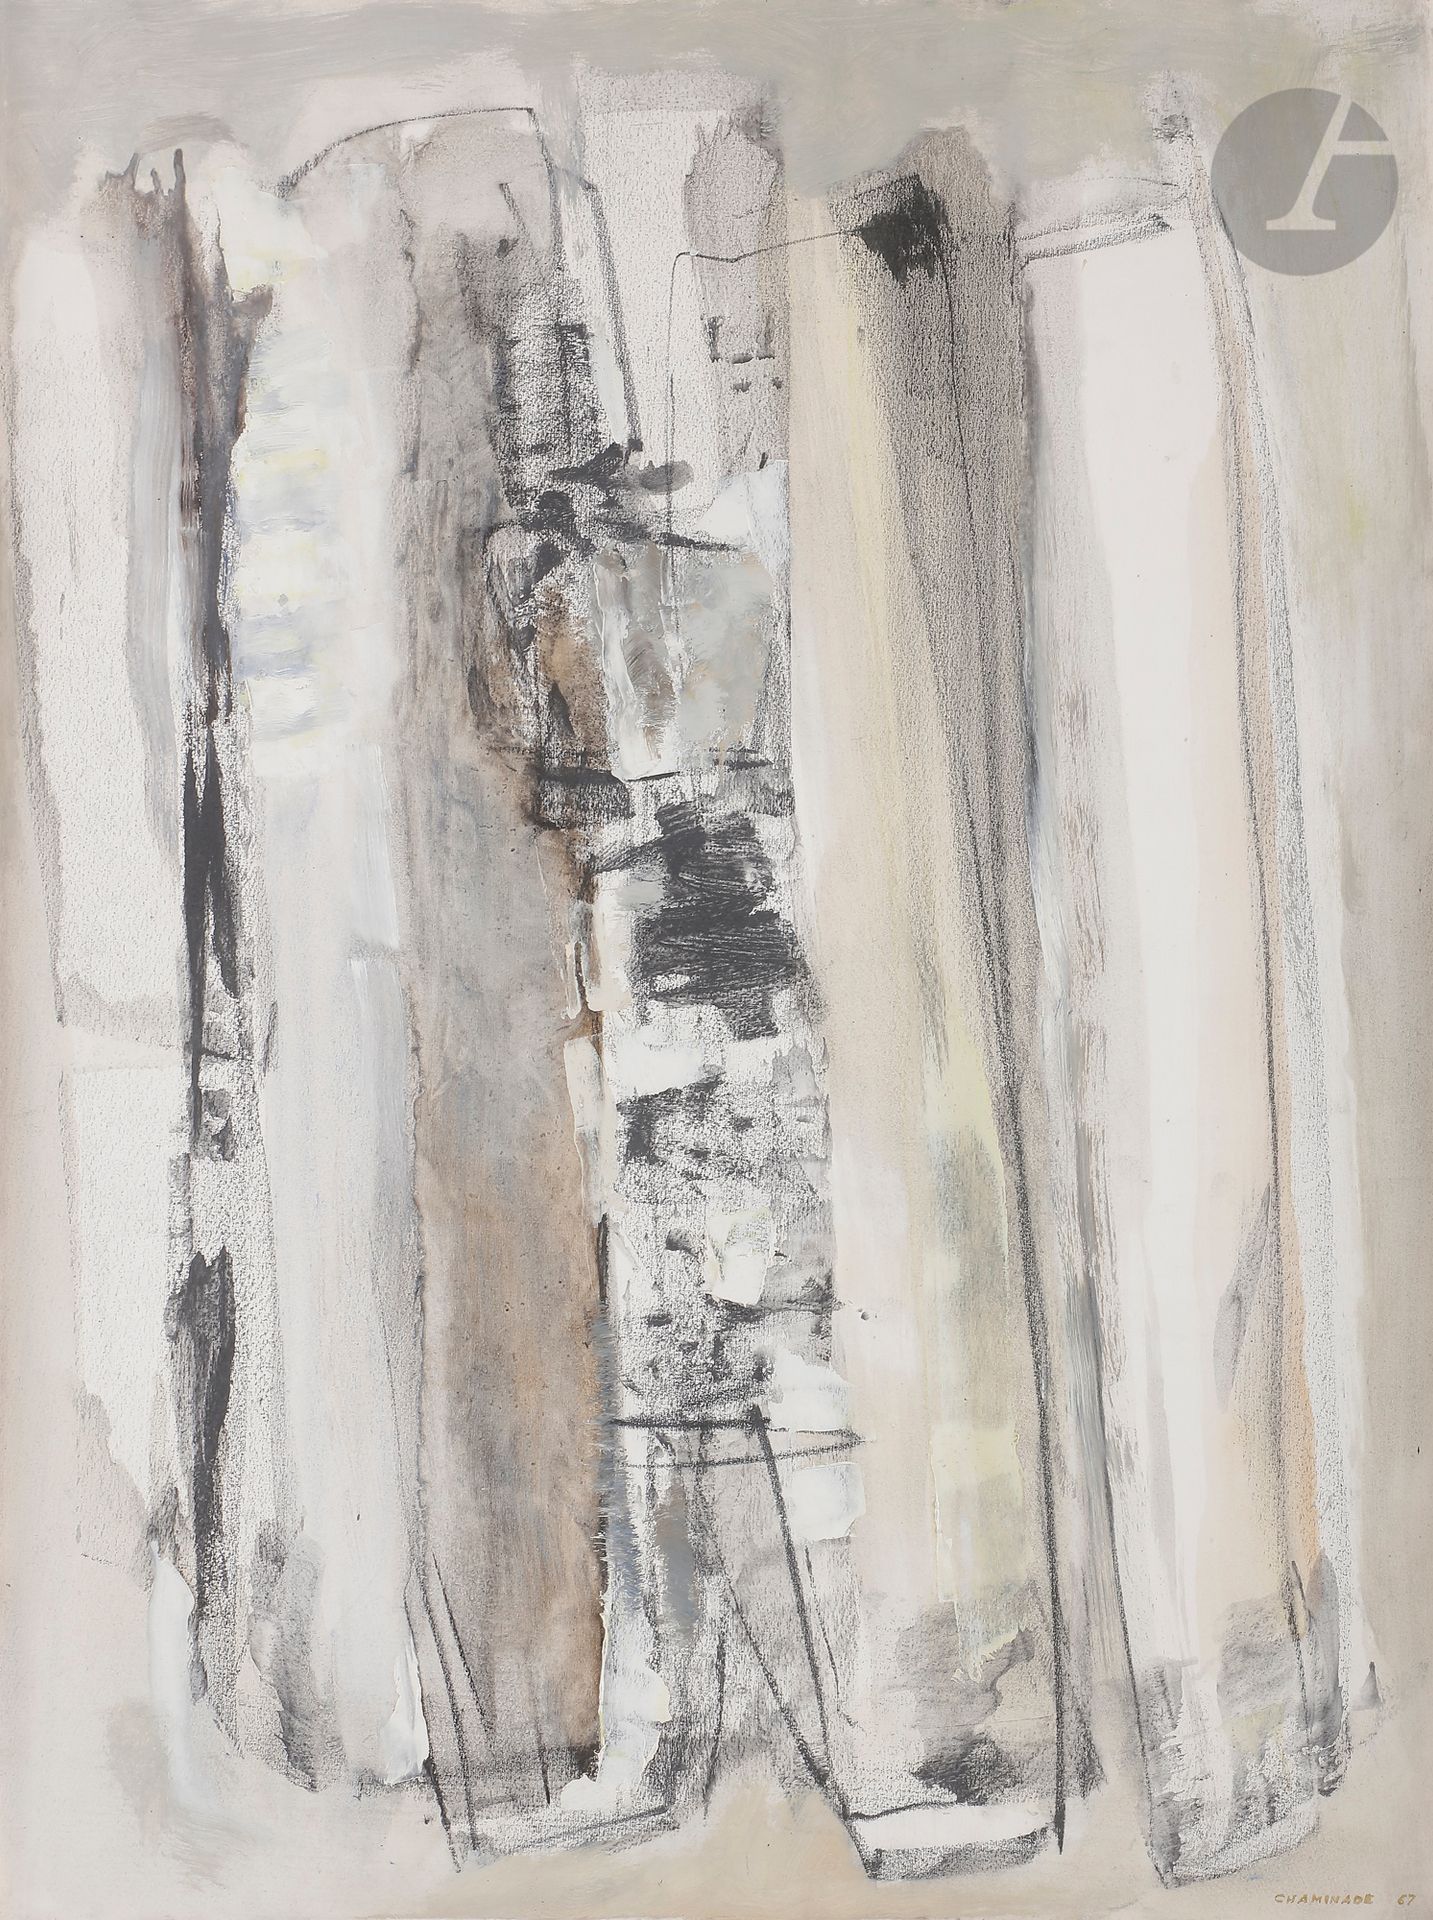 Null 阿尔贝-沙米纳德(1923-2010)
创作, 1967
纸上油彩和木炭装在画布上。
右下方有签名和日期。
65 x 50厘米